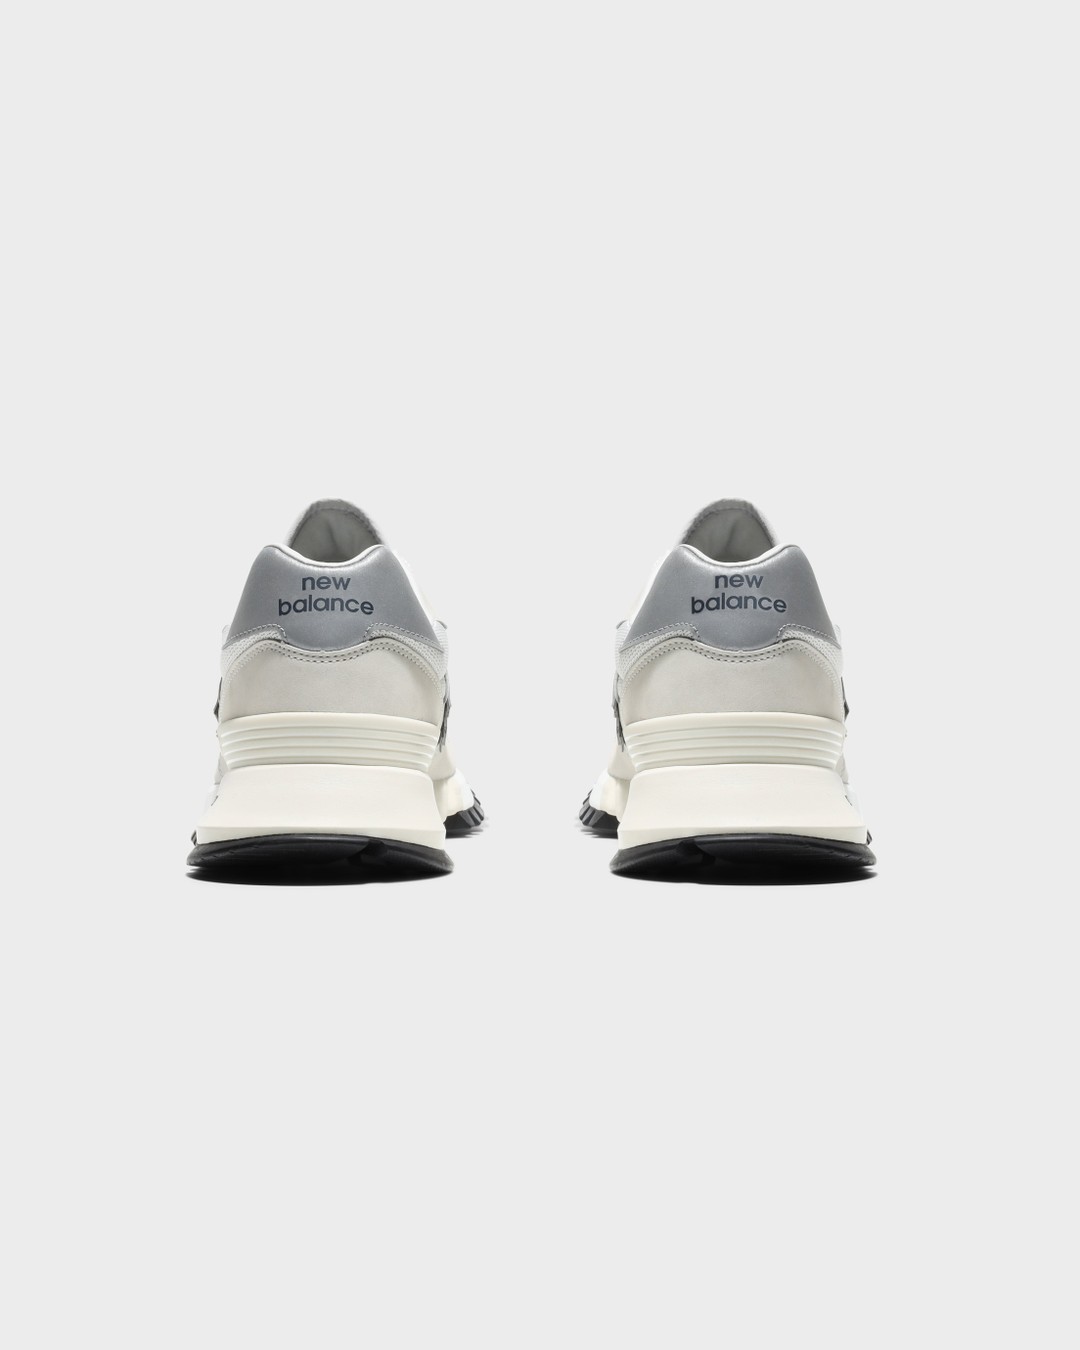 New Balance – Tokyo Design Studio R-C1300 Grey - Sneakers - White - Image 3